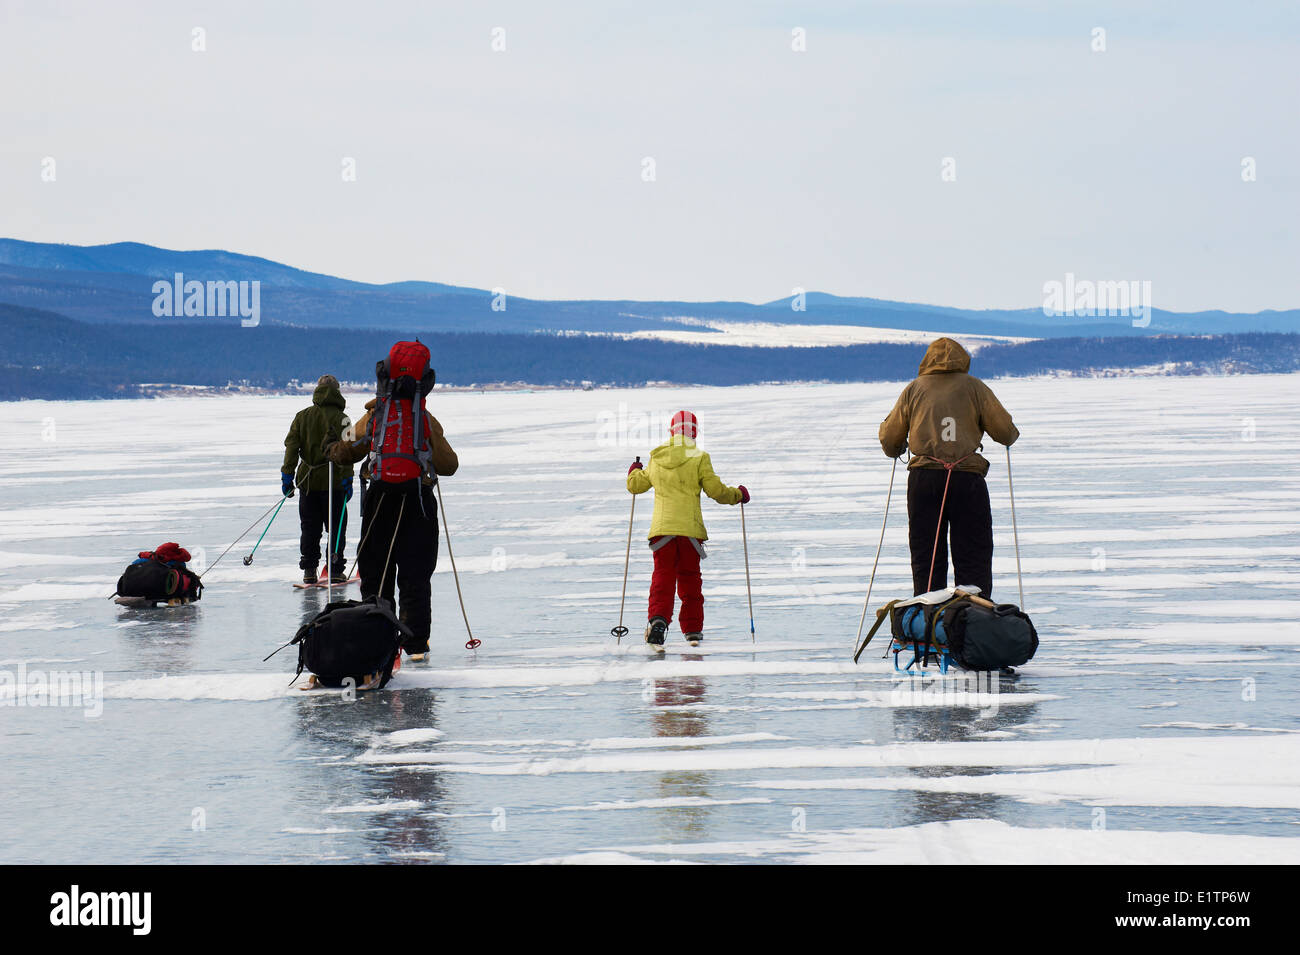 Russia, Siberia, Irkutsk oblast, Baikal lake, Maloe More (little sea), frozen lake during winter, ice sking Stock Photo